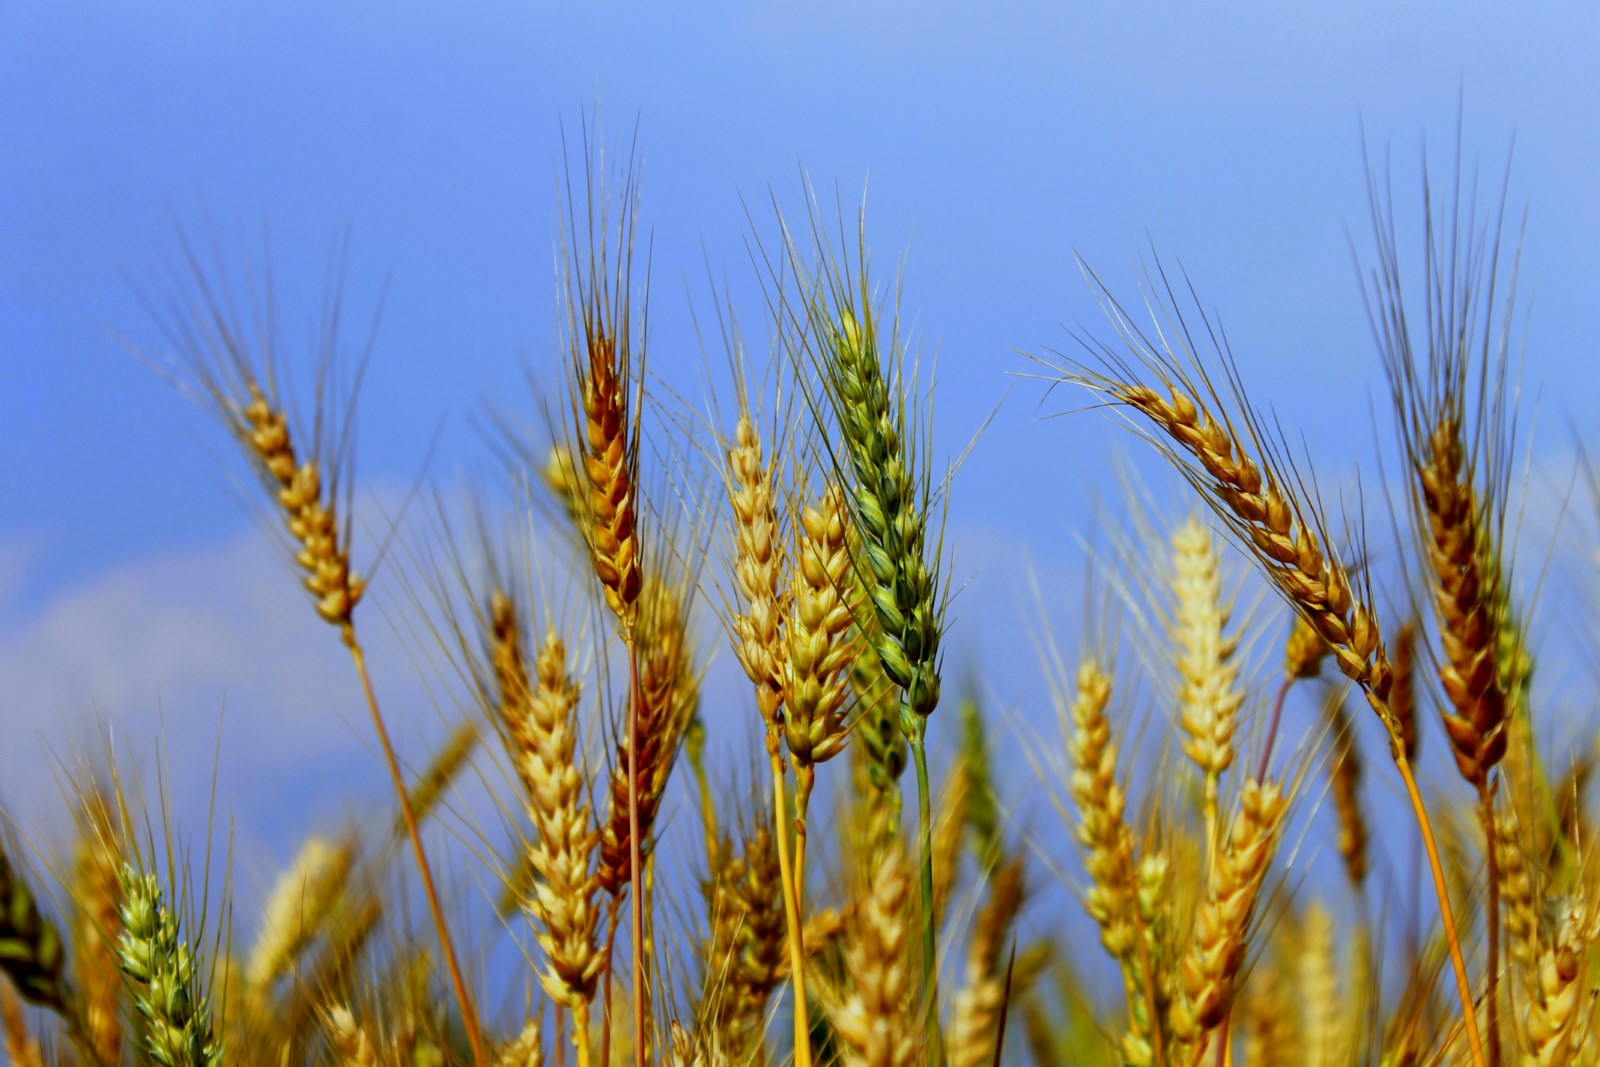 GM wheat breakout results in Asian market ban